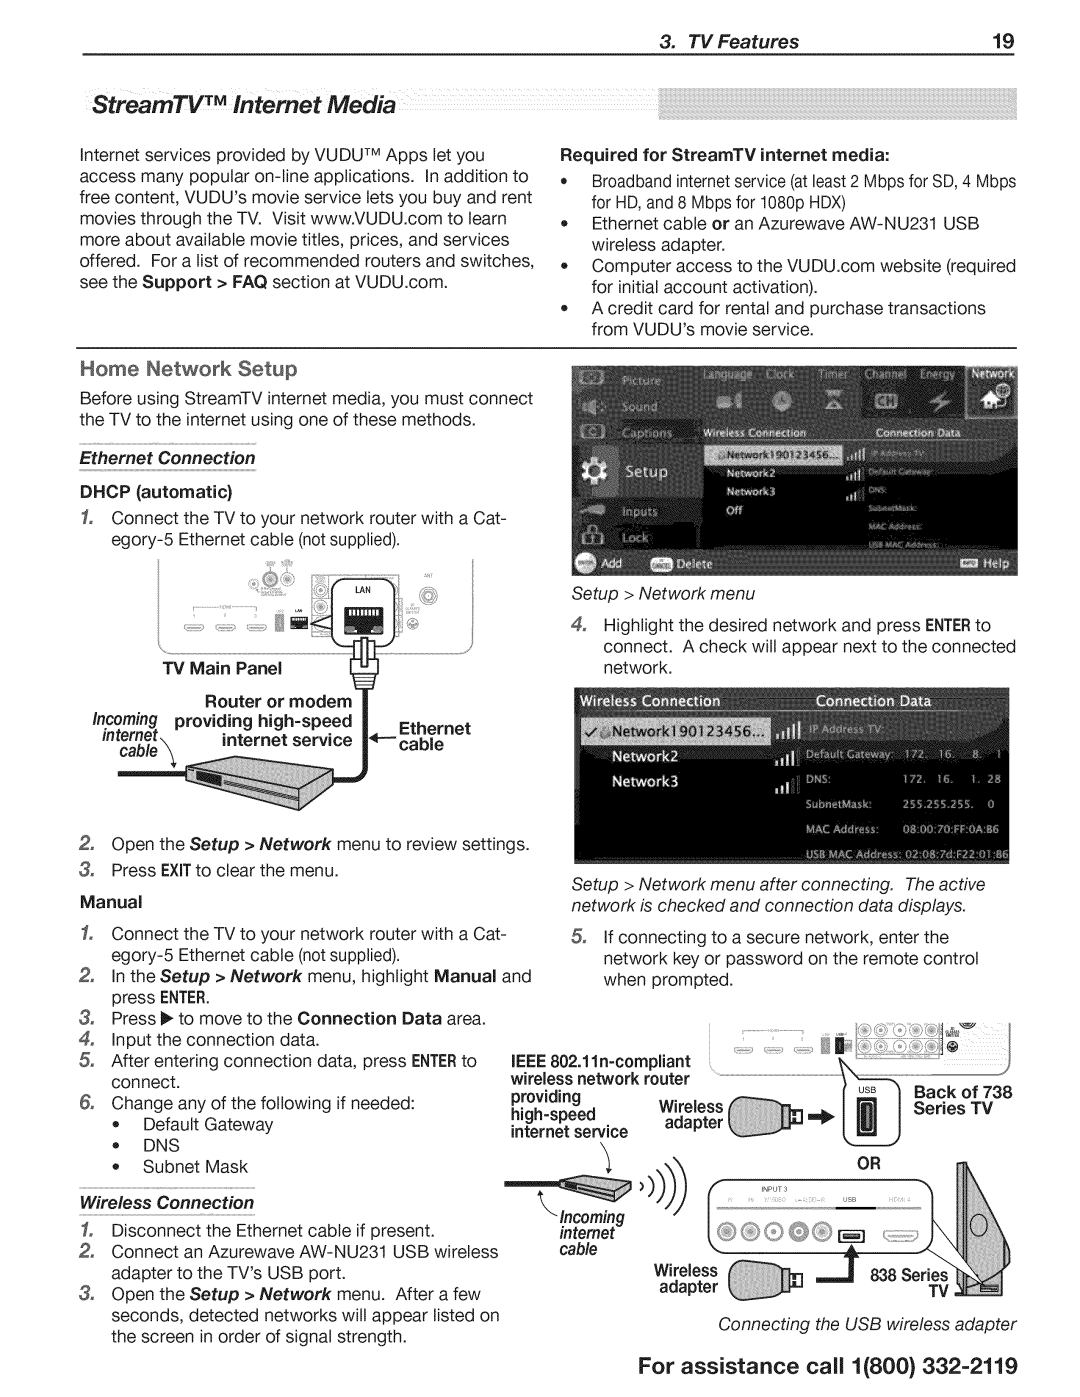 Mitsubishi Electronics 838 StreamTv TM Intemet Media, Home Network Setup, For assistance call 1800, Ethernet Connection 